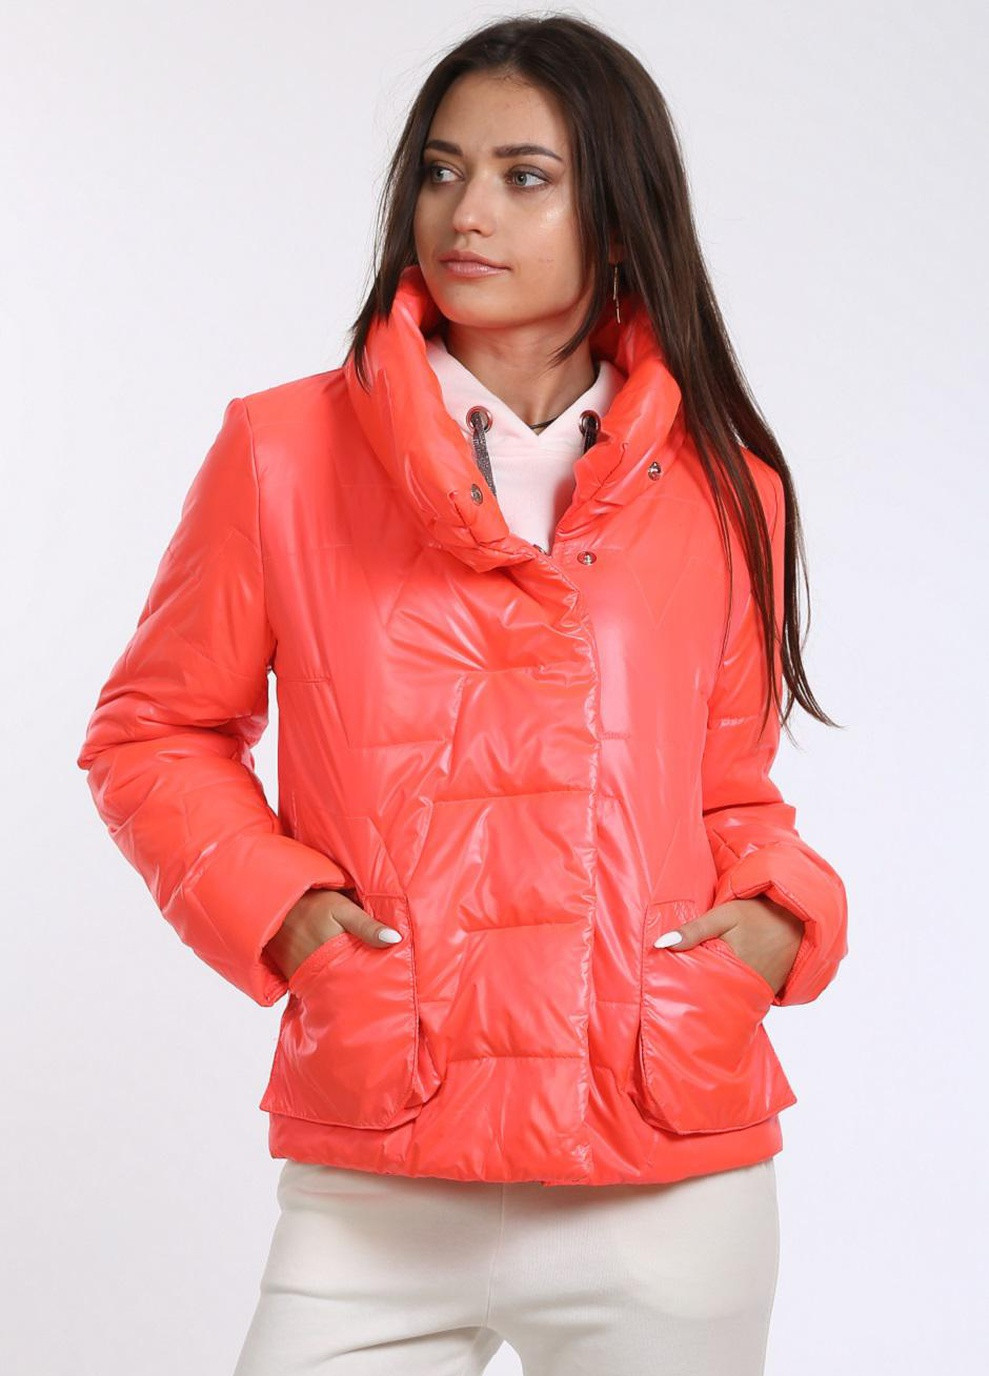 Розовая куртка короткая женская 327 плащевка розовая Актуаль